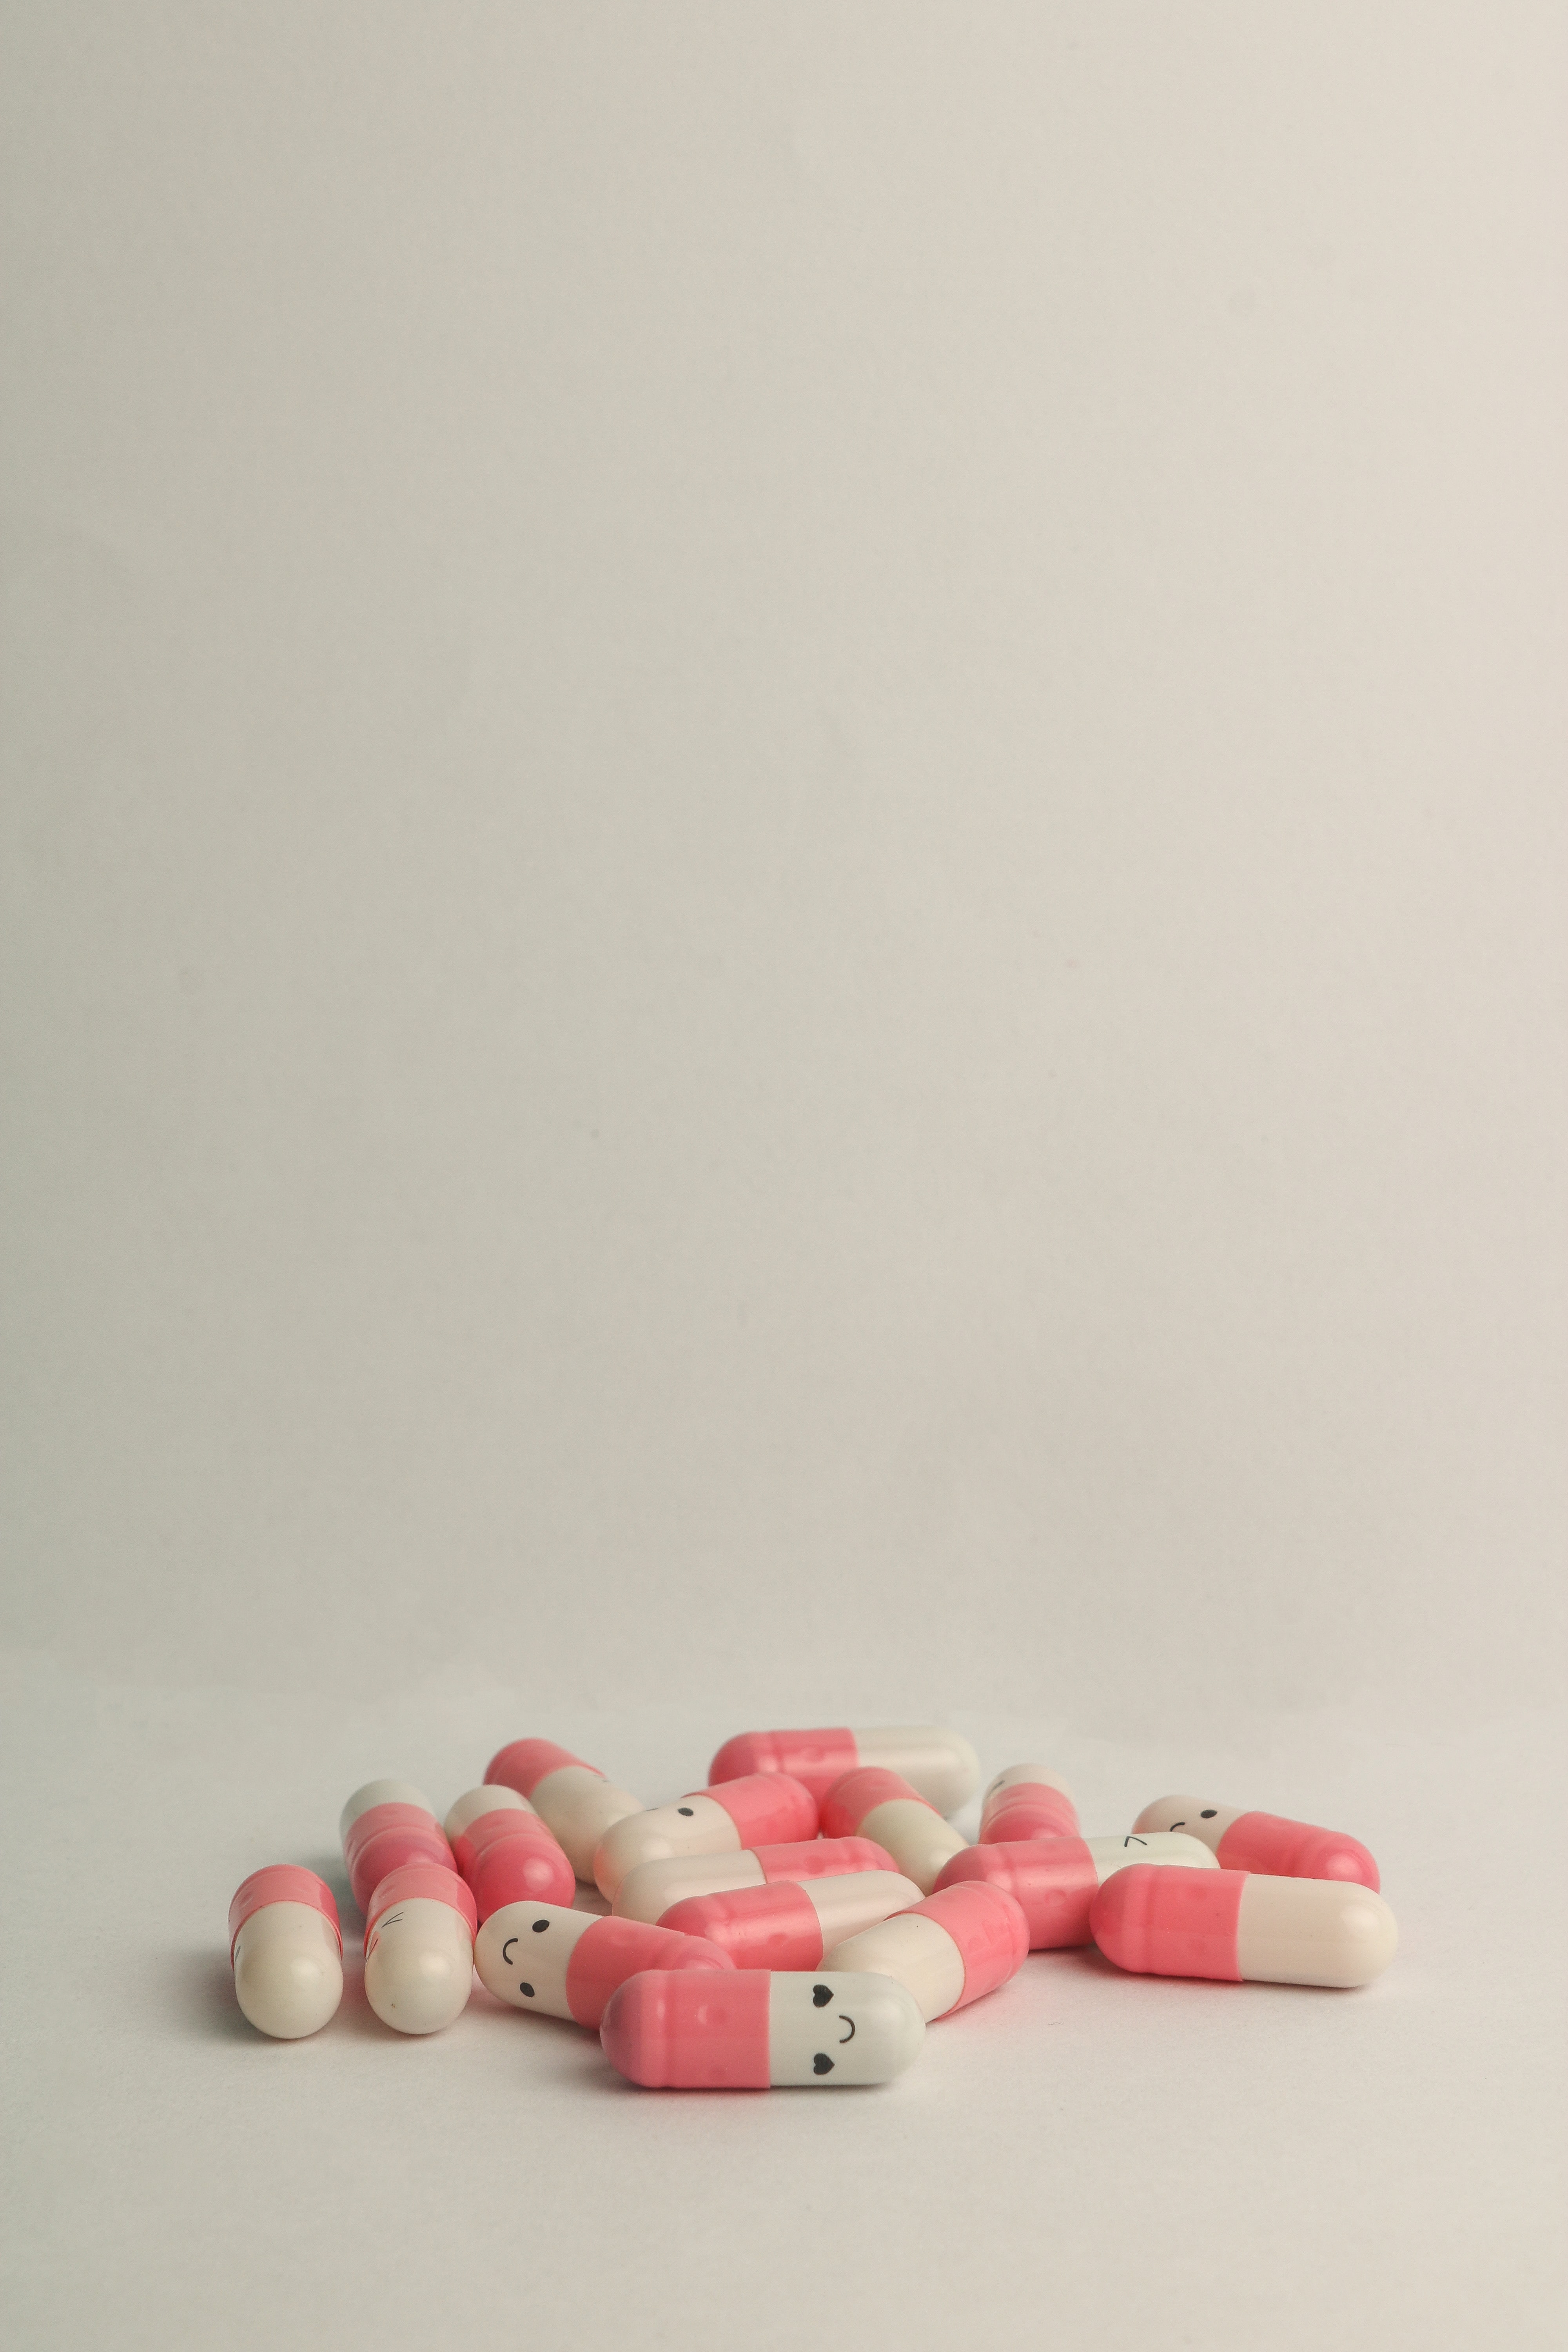 Tennessee Psychiatrist Found Guilty for Illegally Prescribing Opioids